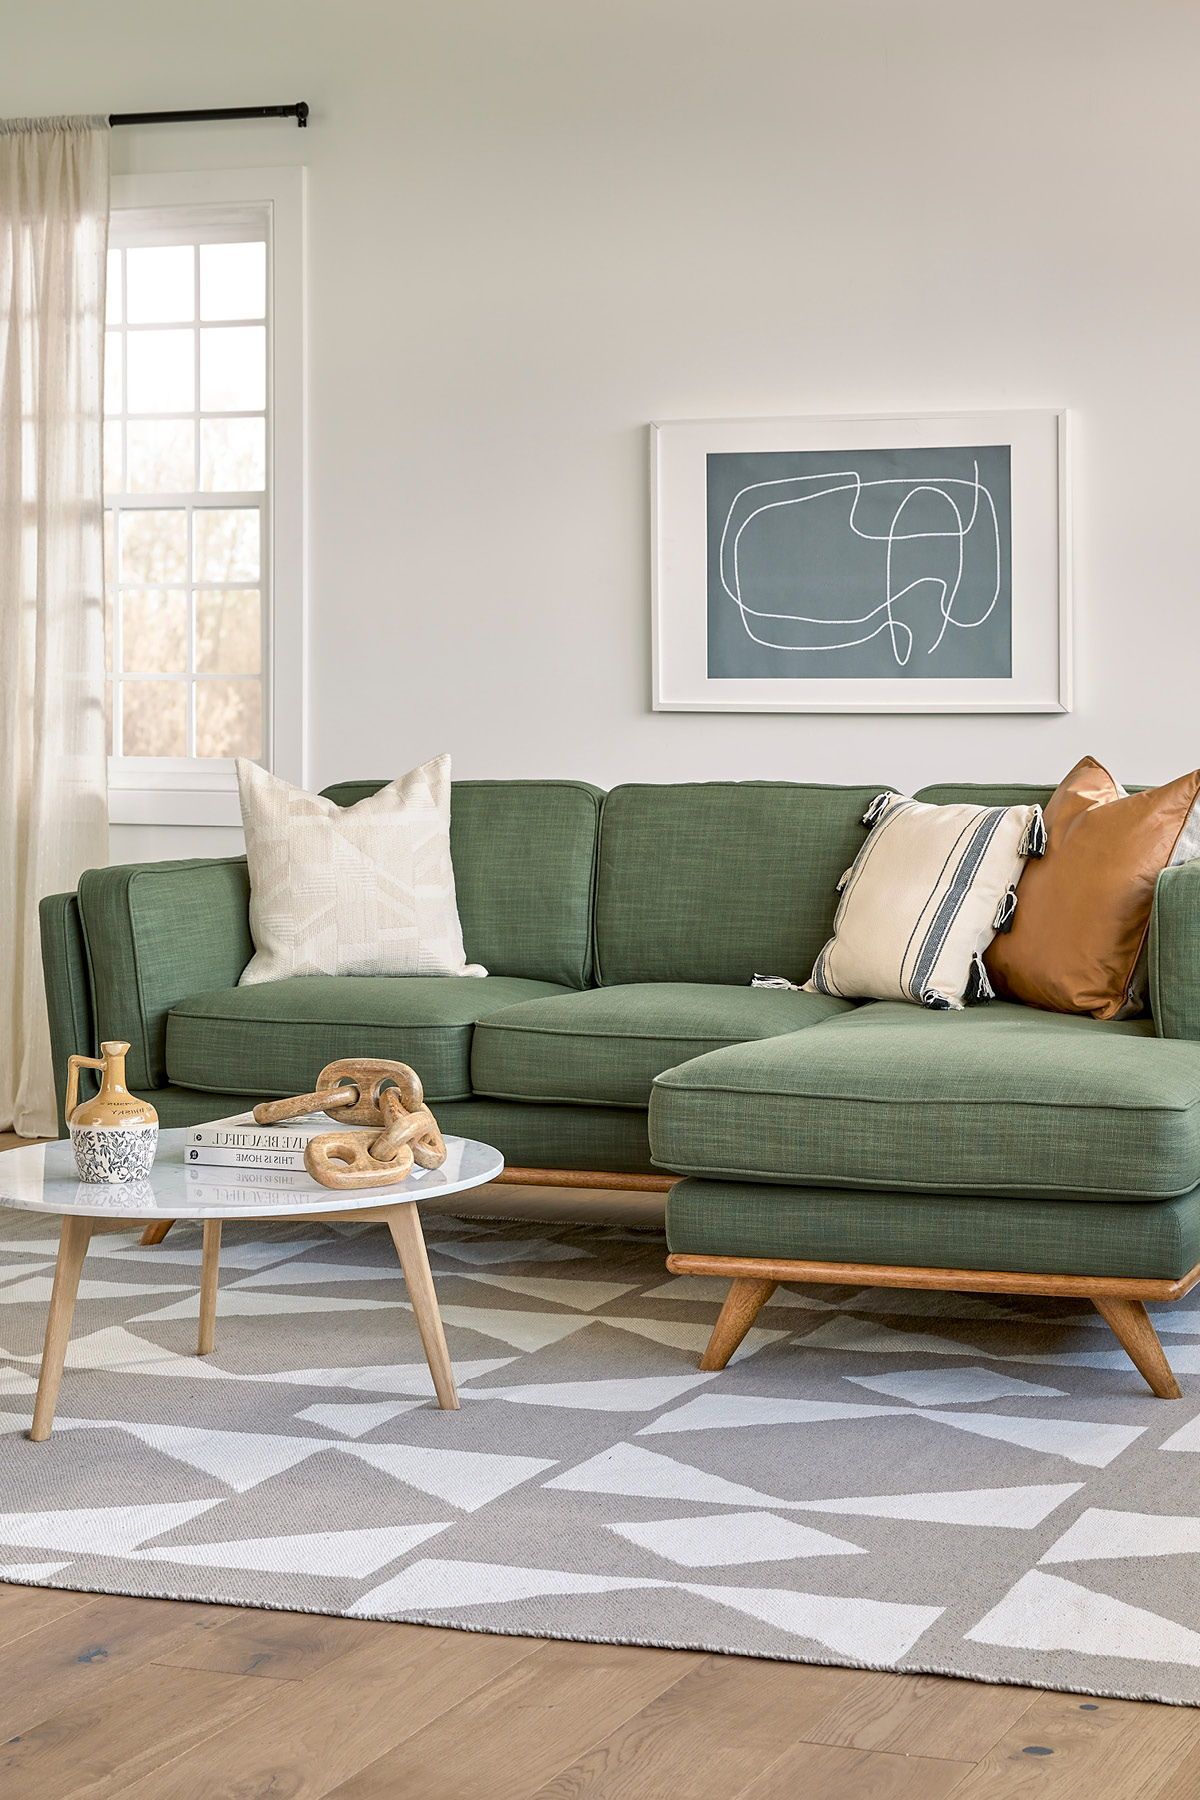 Seating furniture – sleeper sofa
sectional